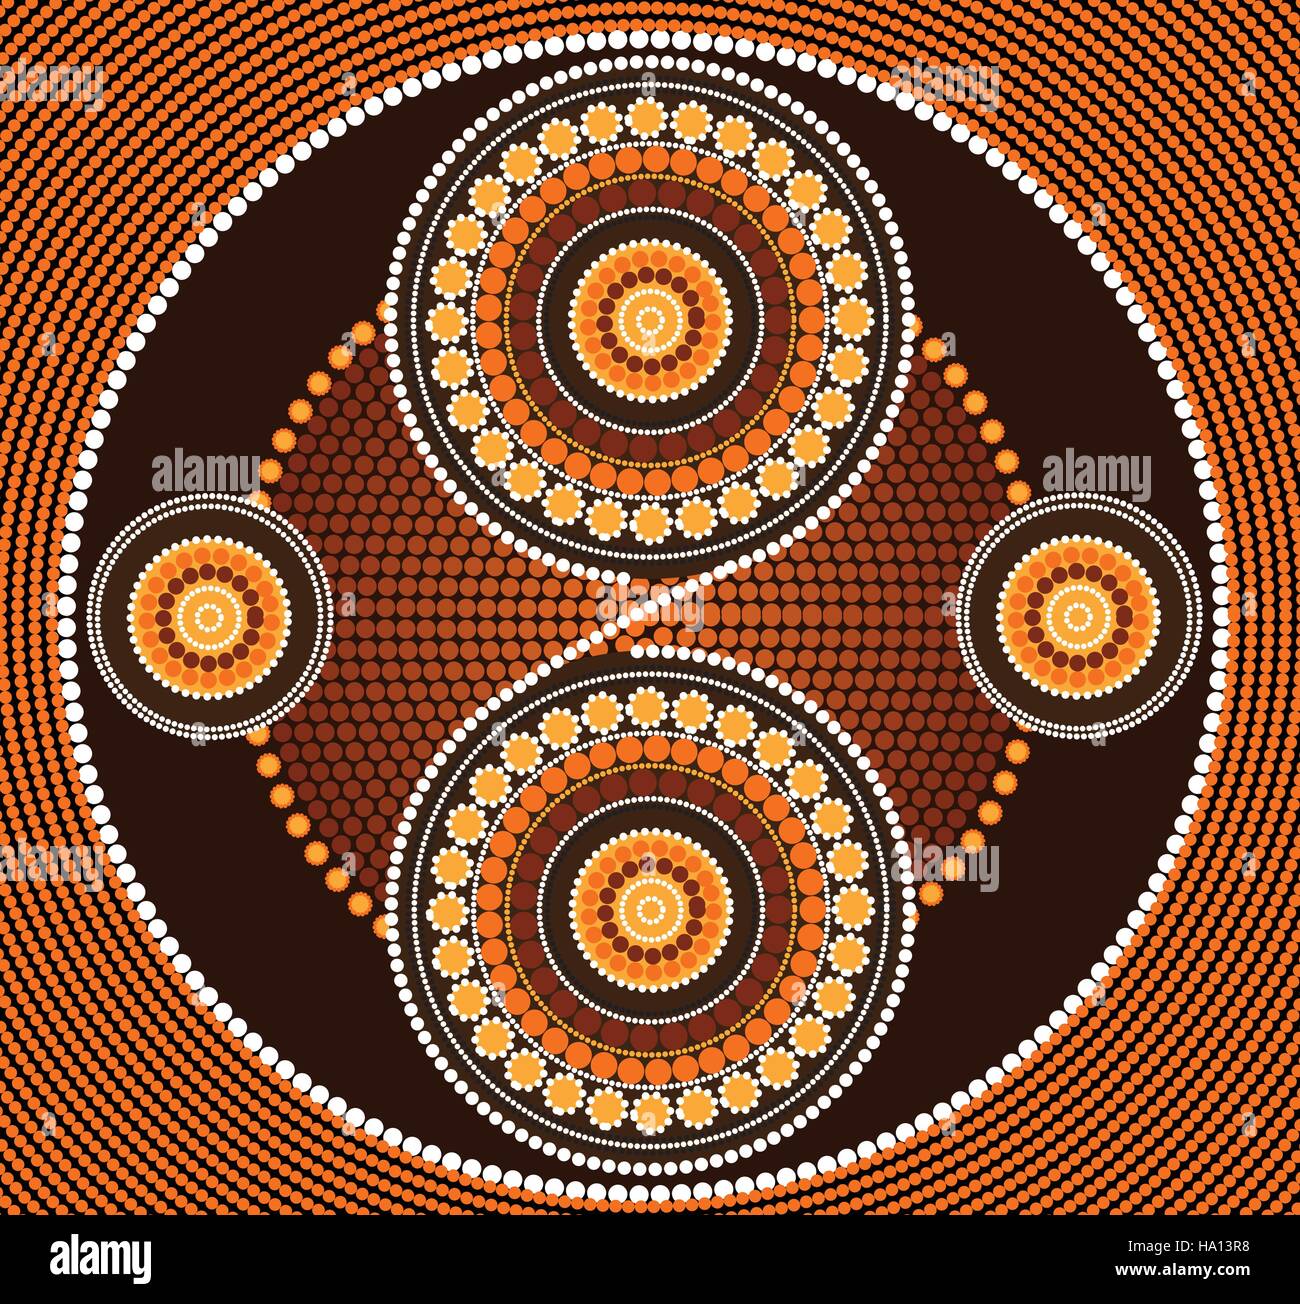 Aboriginal Art Vector Design Illustration Based On Aboriginal Style Stock Vector Image Art Alamy